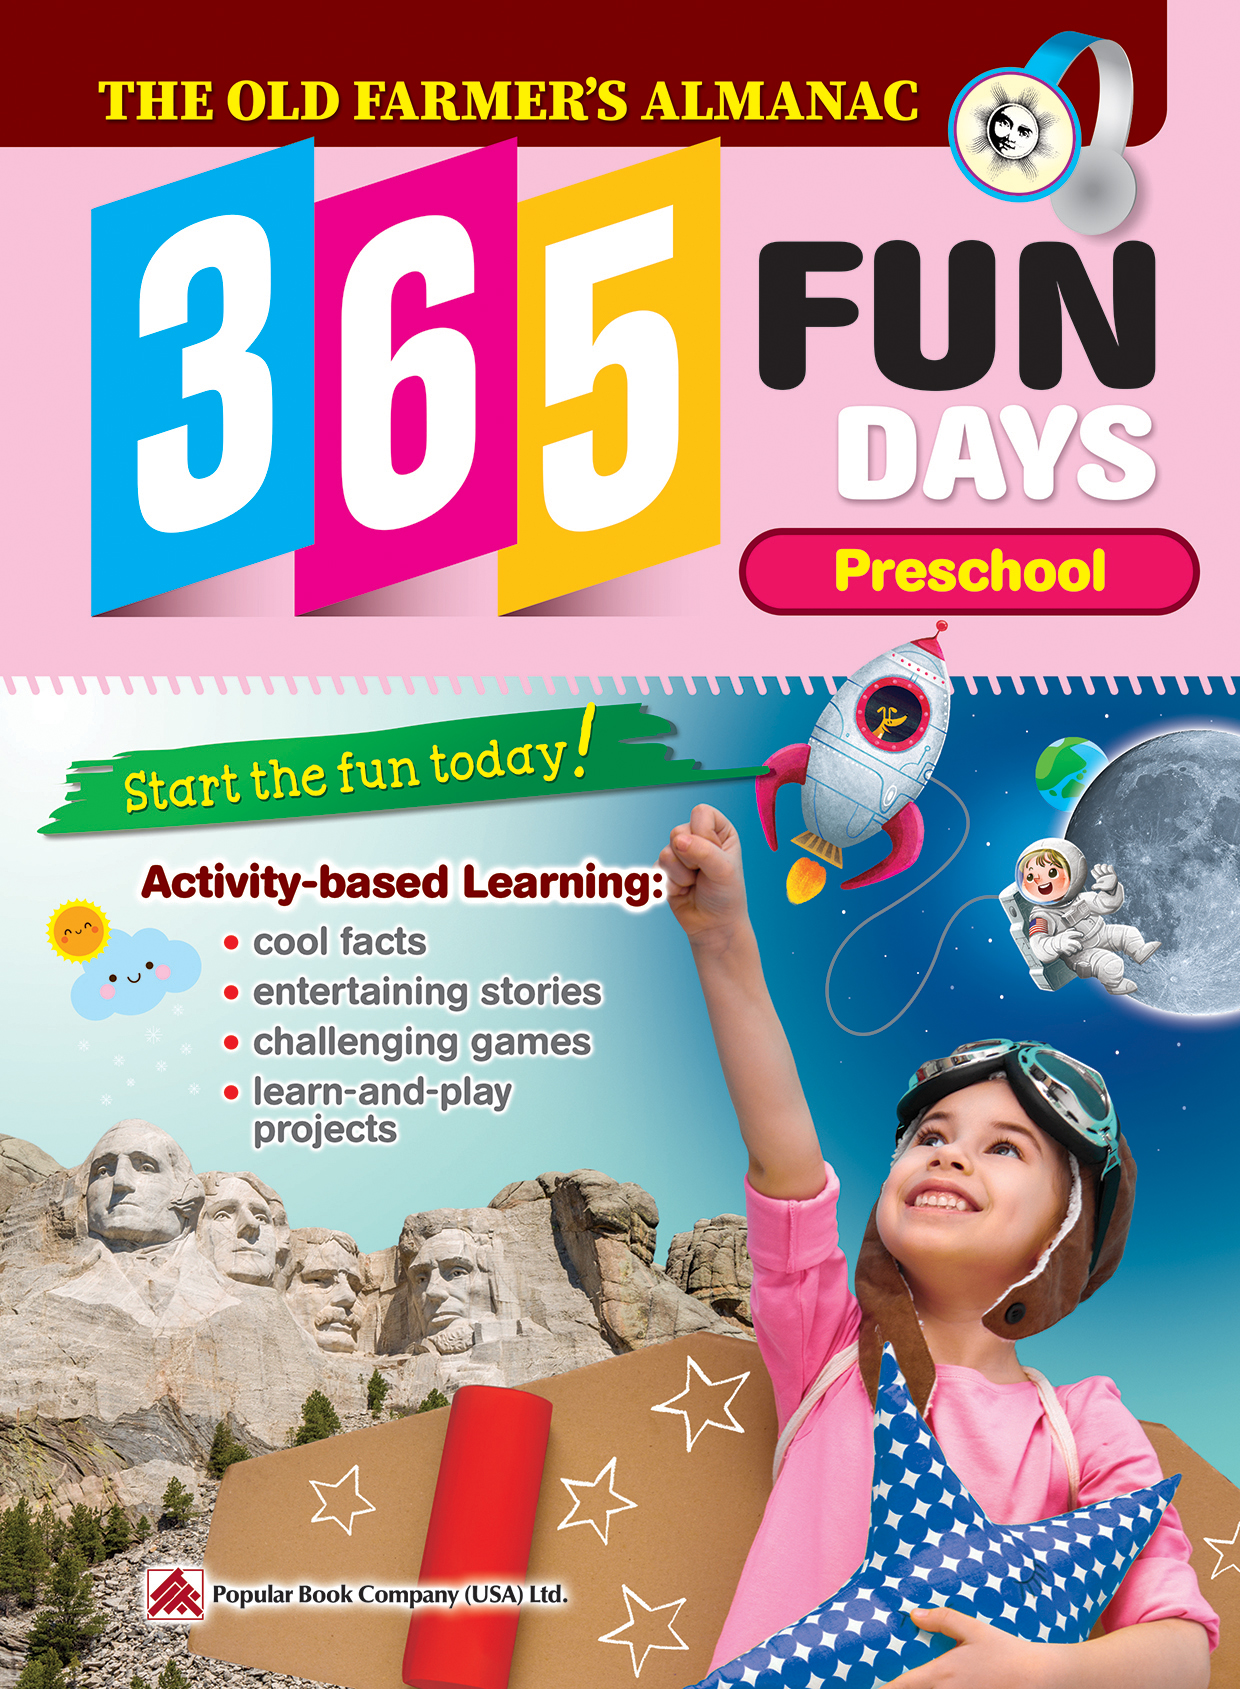 365 Fun Days Preschool - Popular Book Company (USA) Ltd.